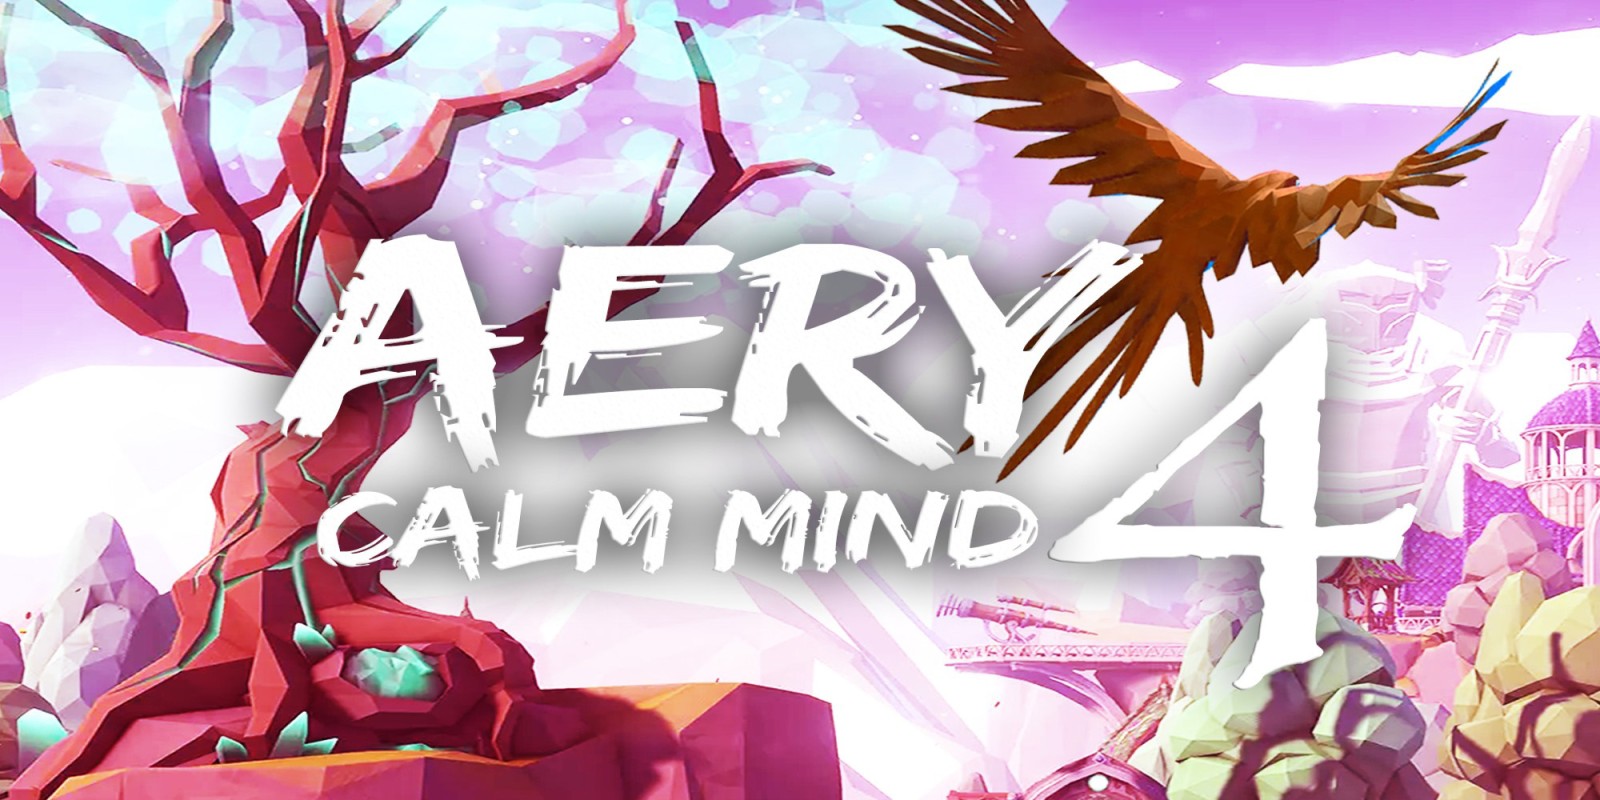 Aery - Calm Mind 4